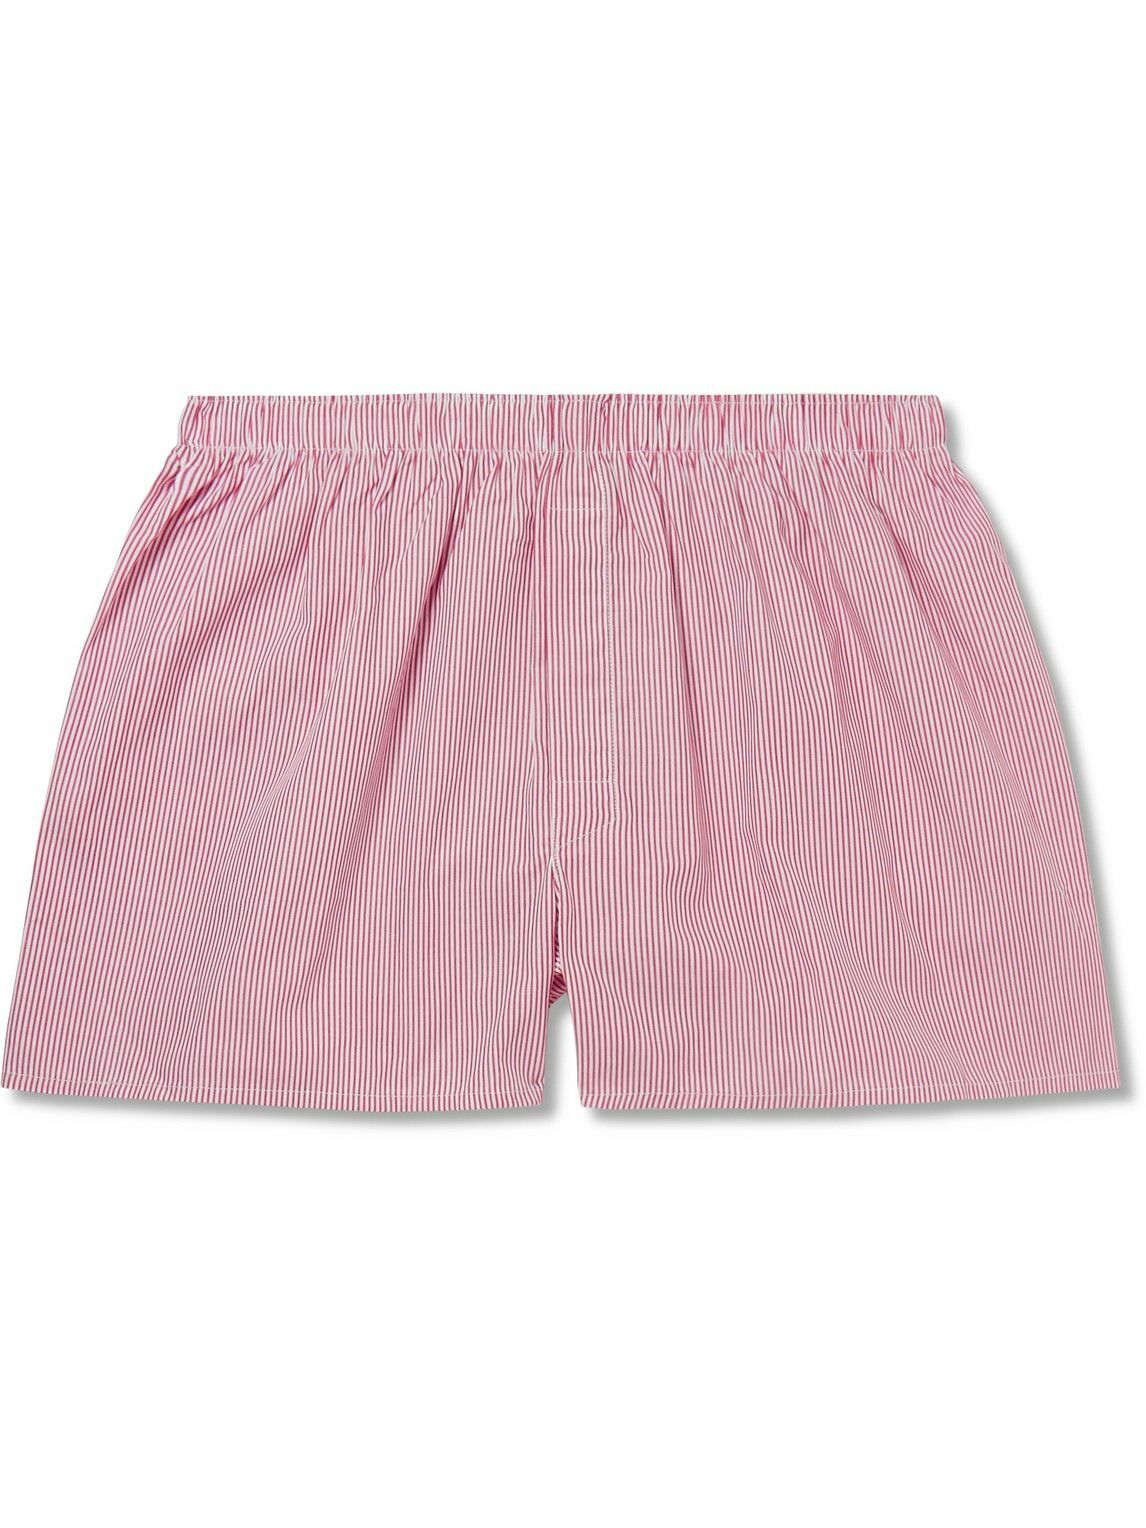 Photo: Sunspel - Striped Cotton Boxer Shorts - Pink